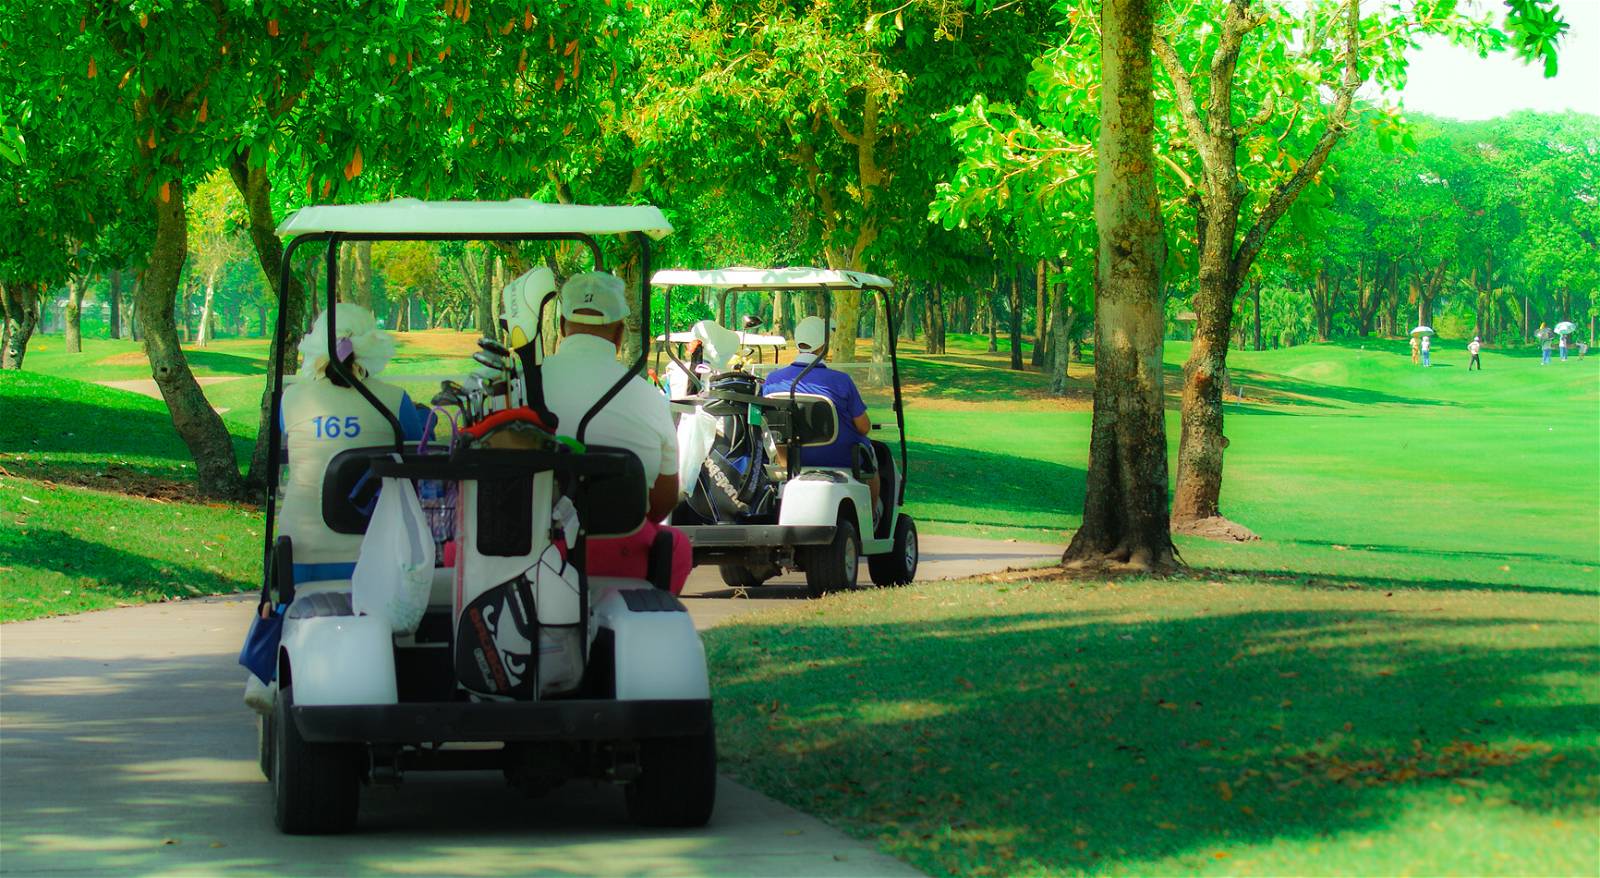 Cart, Legacy Golf Club, Bangkok, Thailand